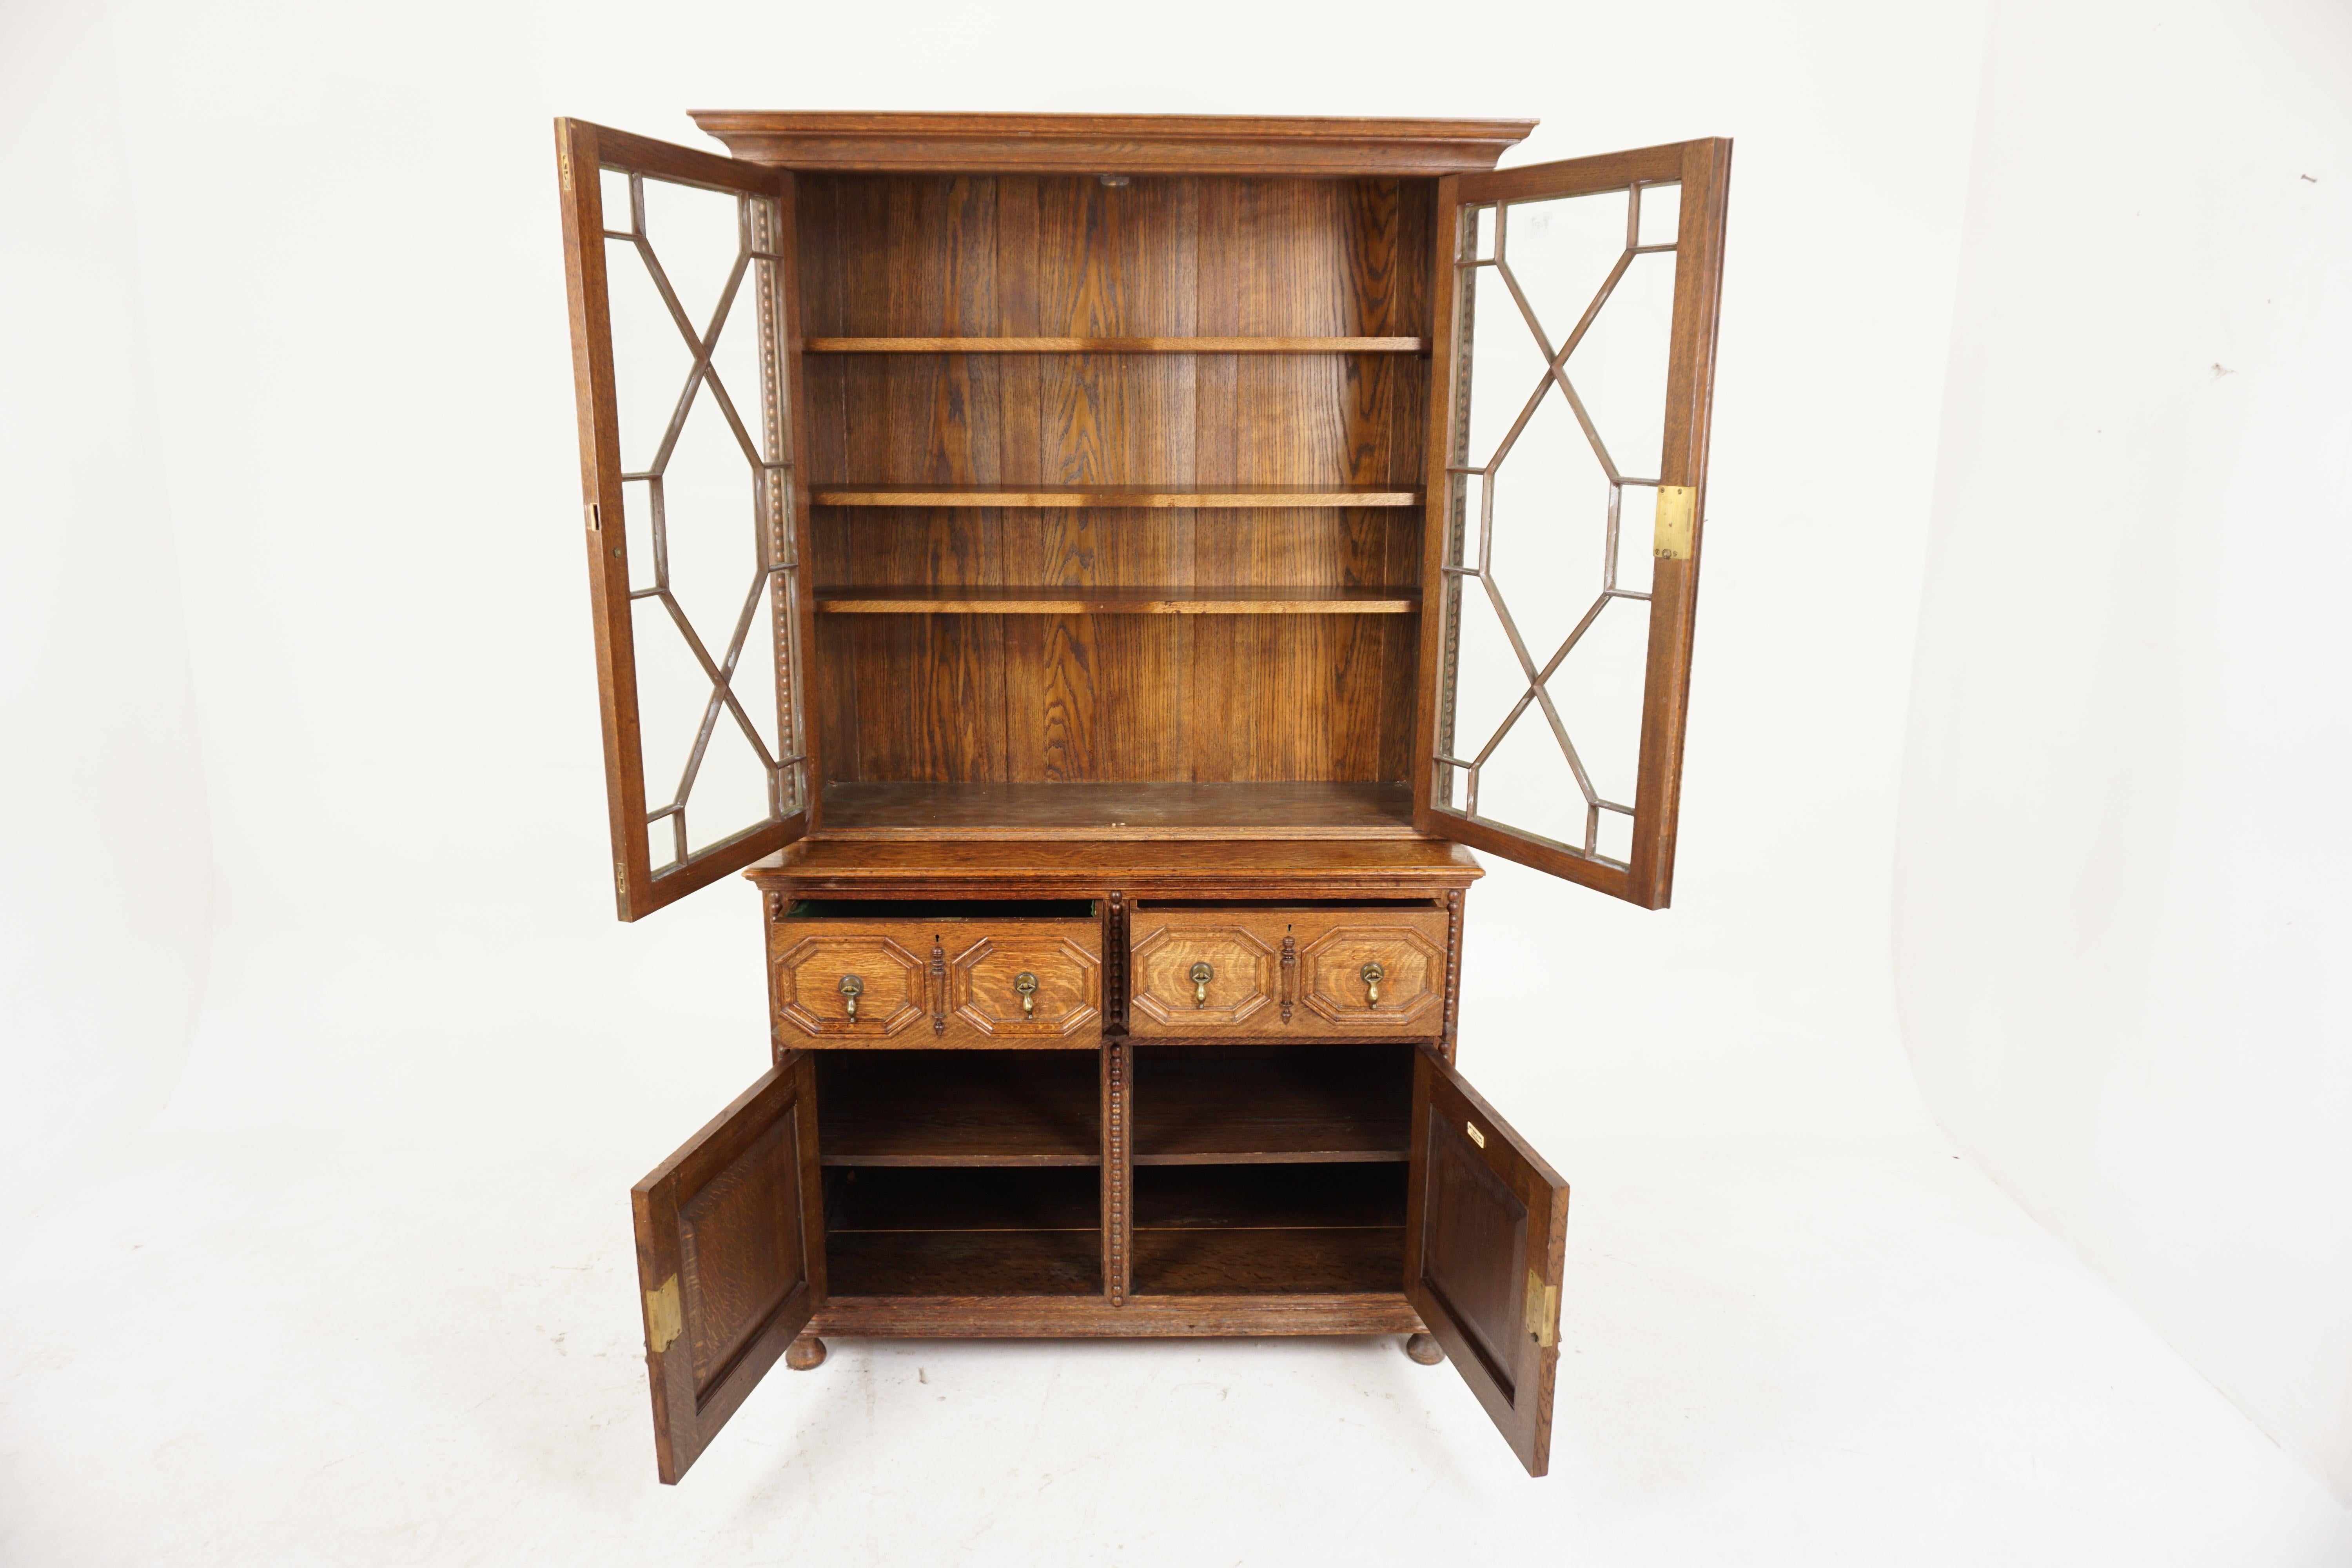 Scottish Victorian Oak Cabinet Bookcase, “John Taylor Edinburg”, Scotland 1890, H961 For Sale